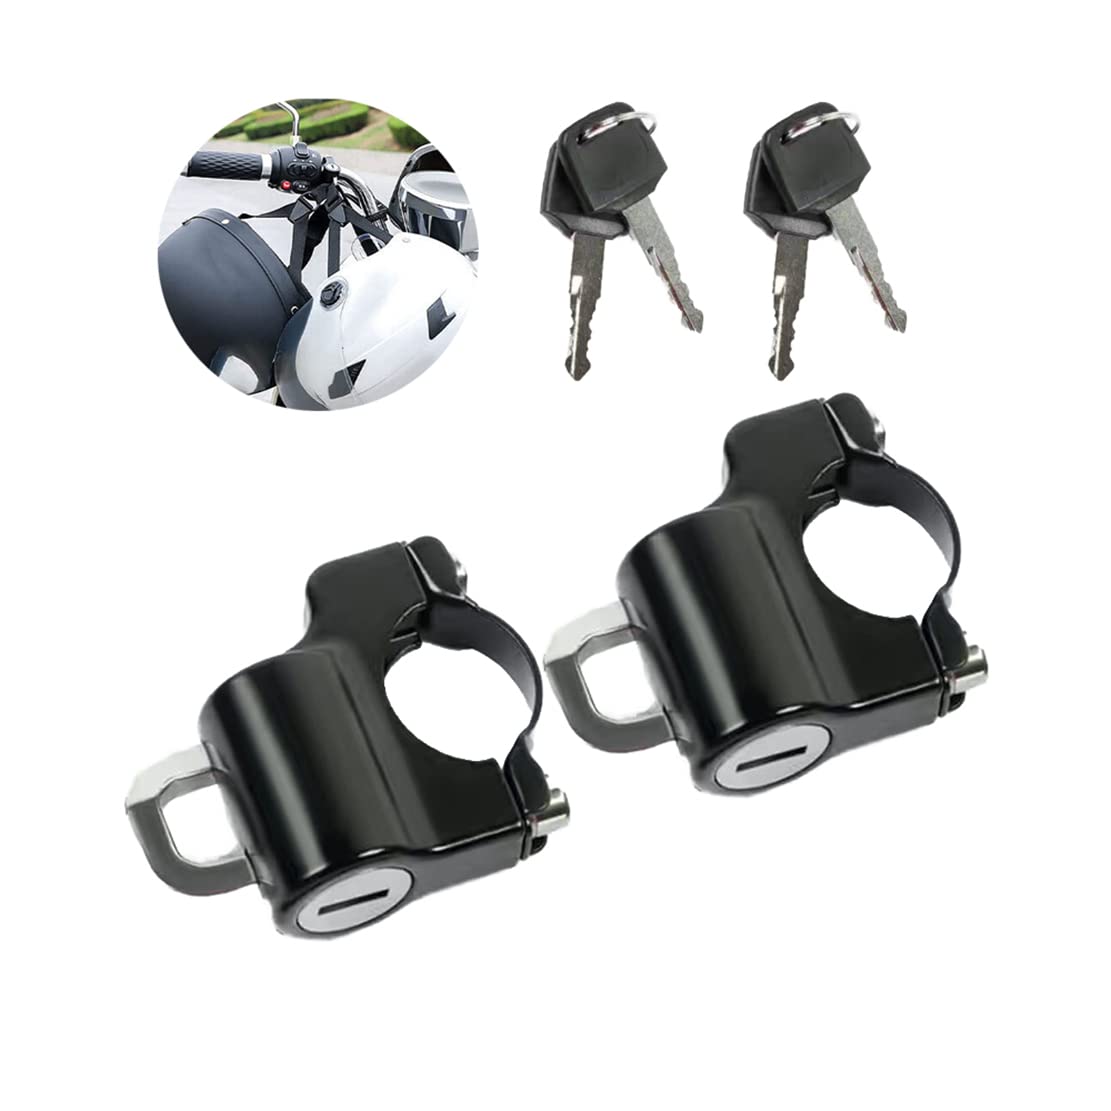 Universal Motorcycle Helmet Lock, Multifunctional Motorcycle Helmet Lock, with 2 Key Tamper-Proof Helmet Security Lock, No- Theft Helmet Lock Metal, for Motorbike Scooter Street Bike (2 Sets) von HADAVAKA